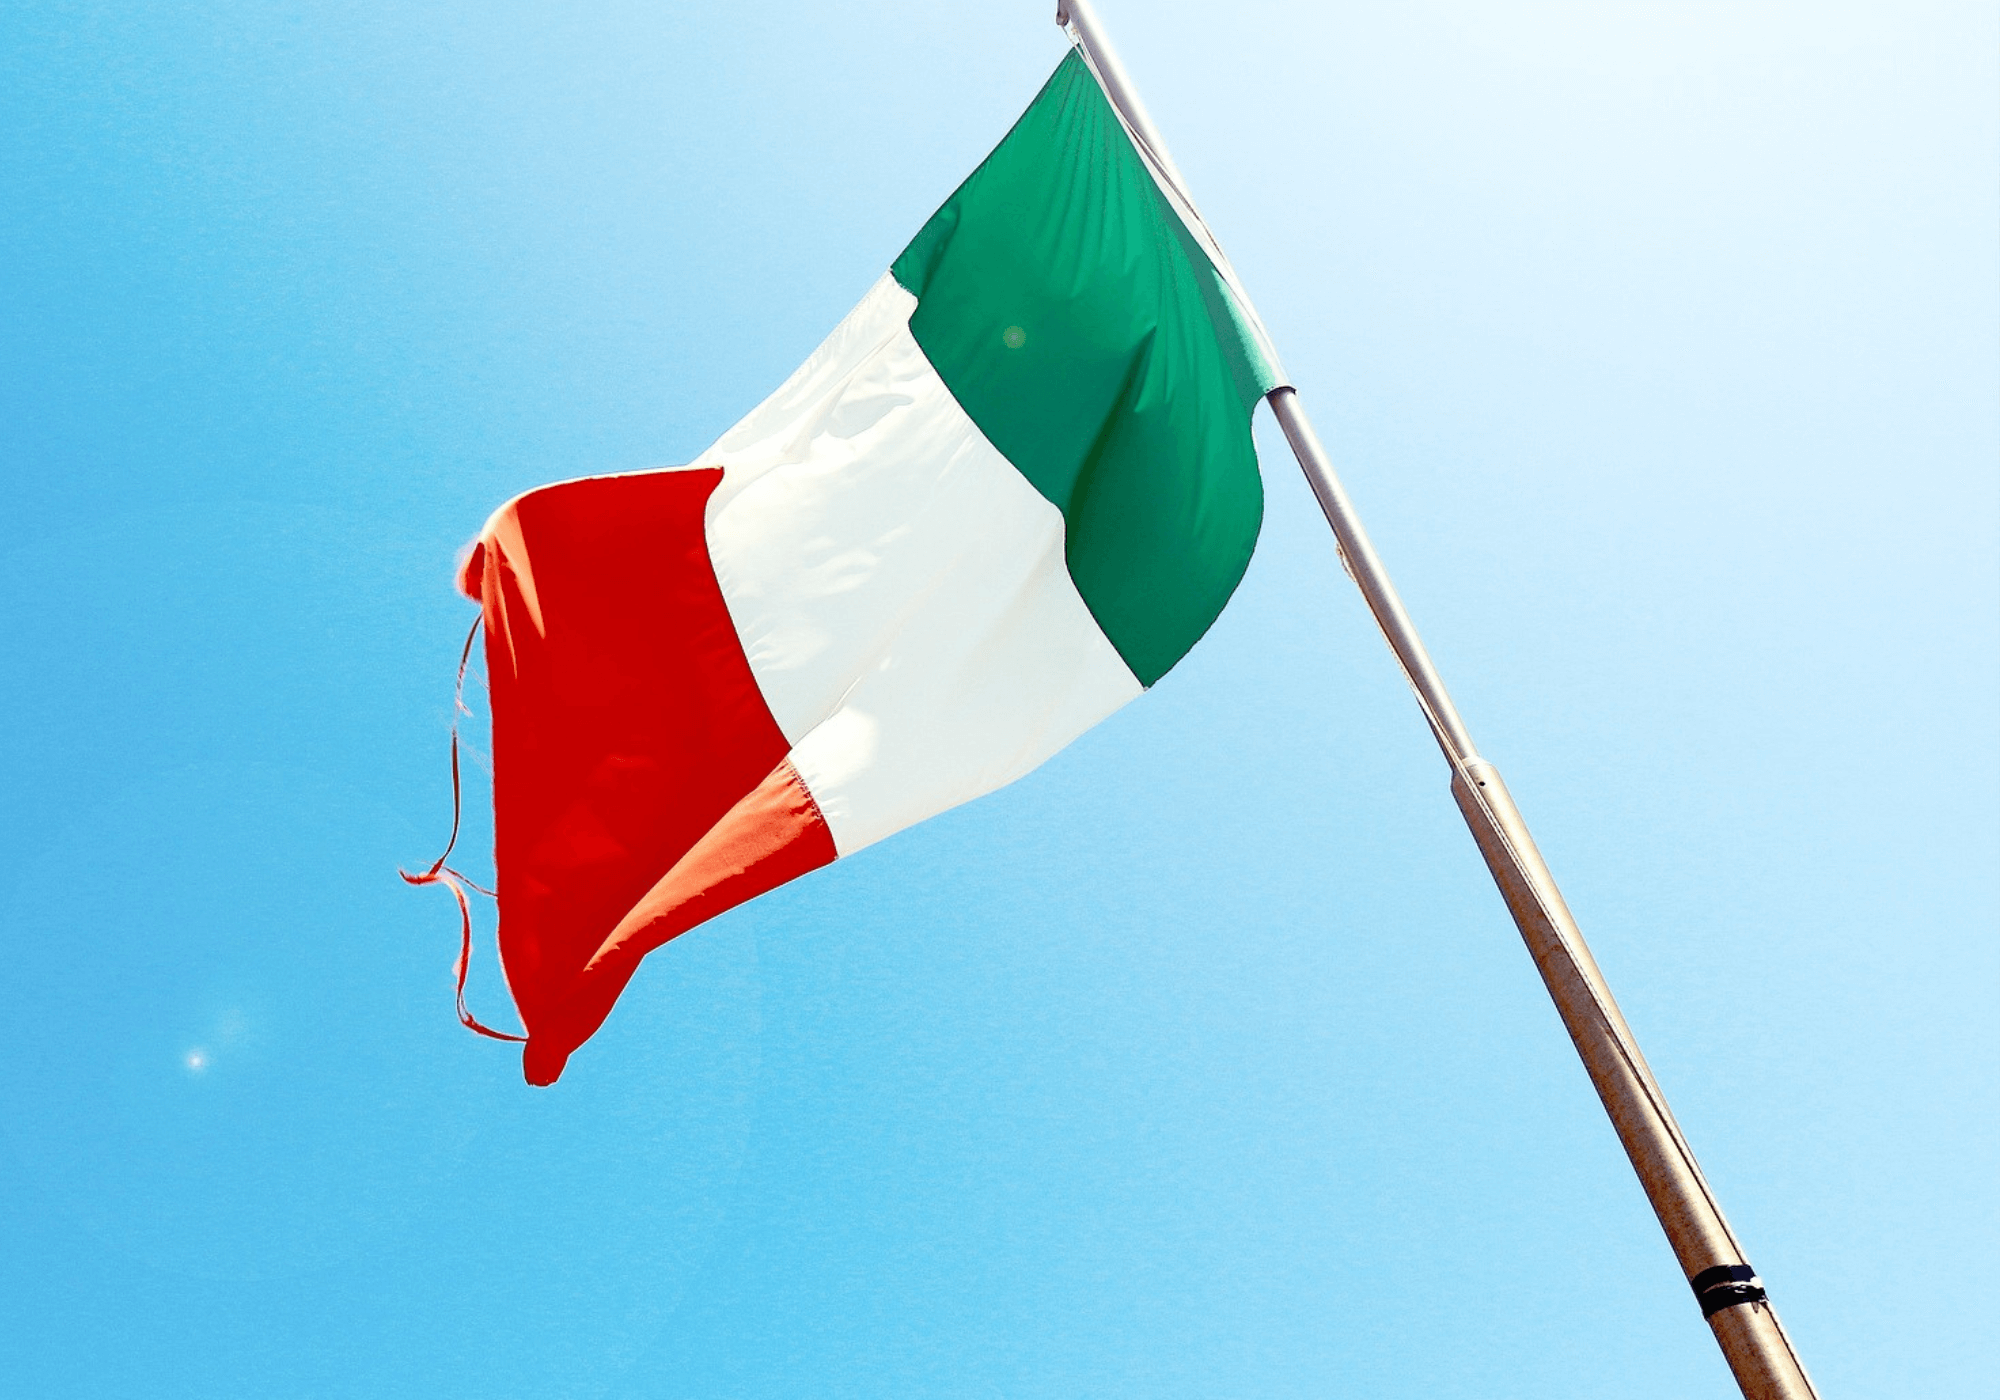 The Italian flag fluttering in blue skies